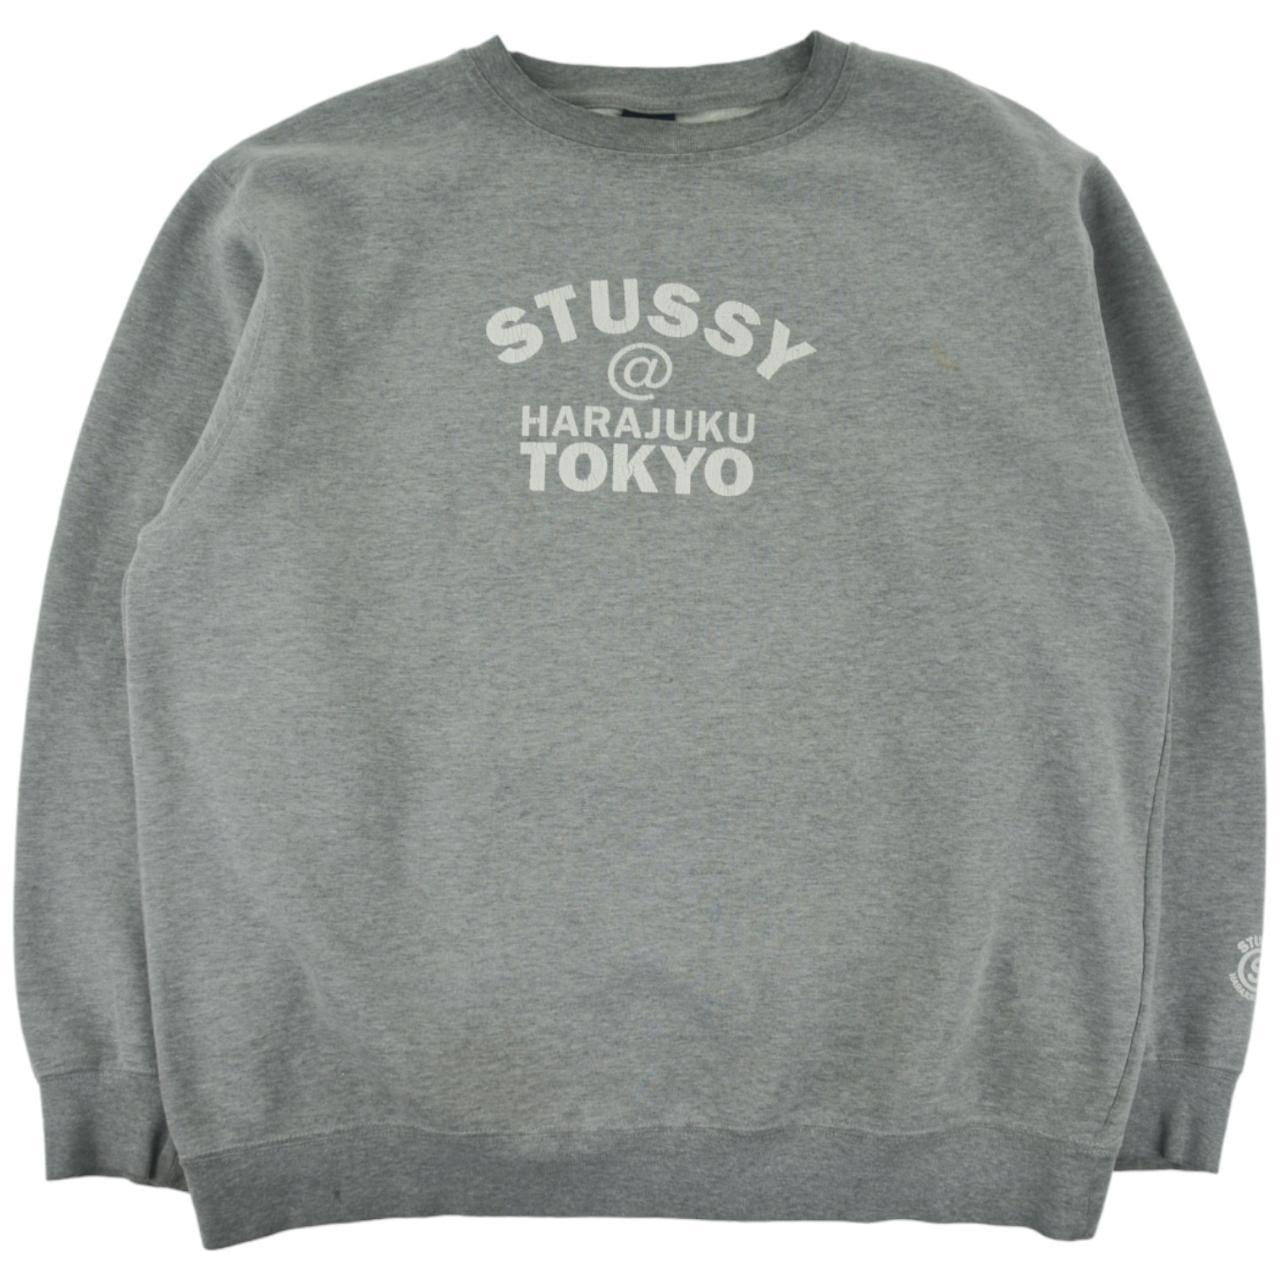 Vintage Stussy Tokyo Harajuku Graphic Sweatshirt Size XL - Known Source